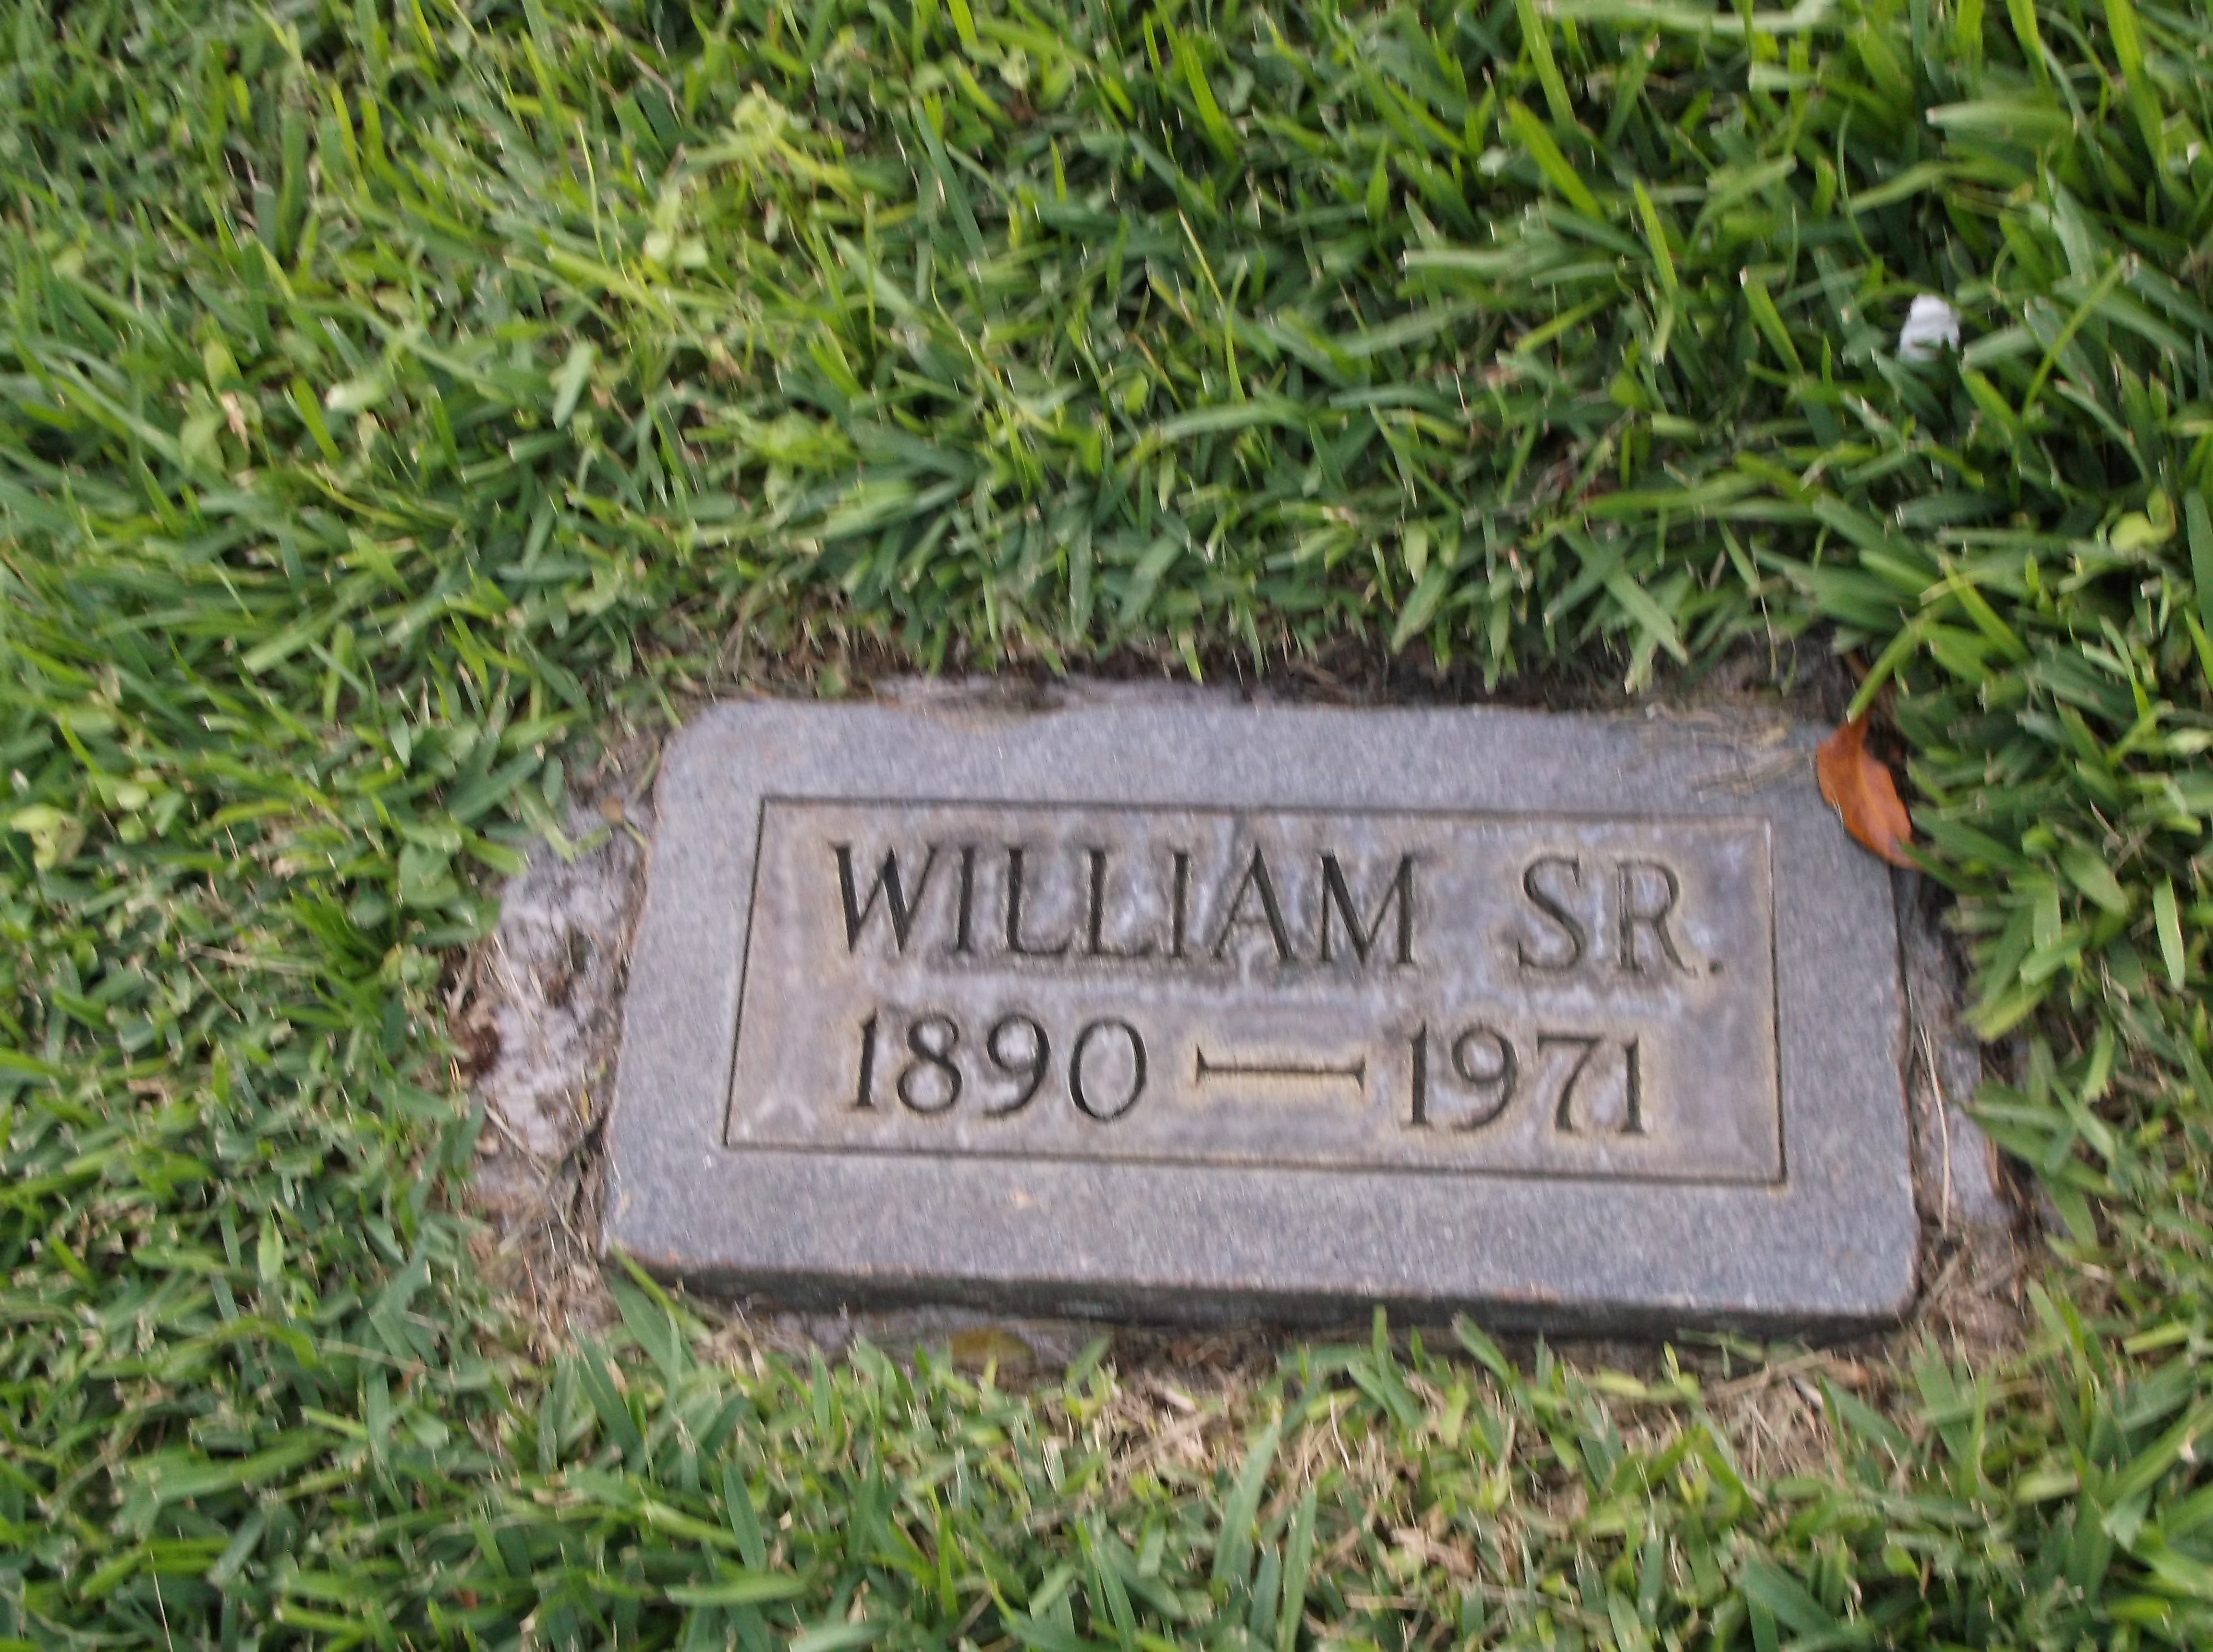 William Day, Sr